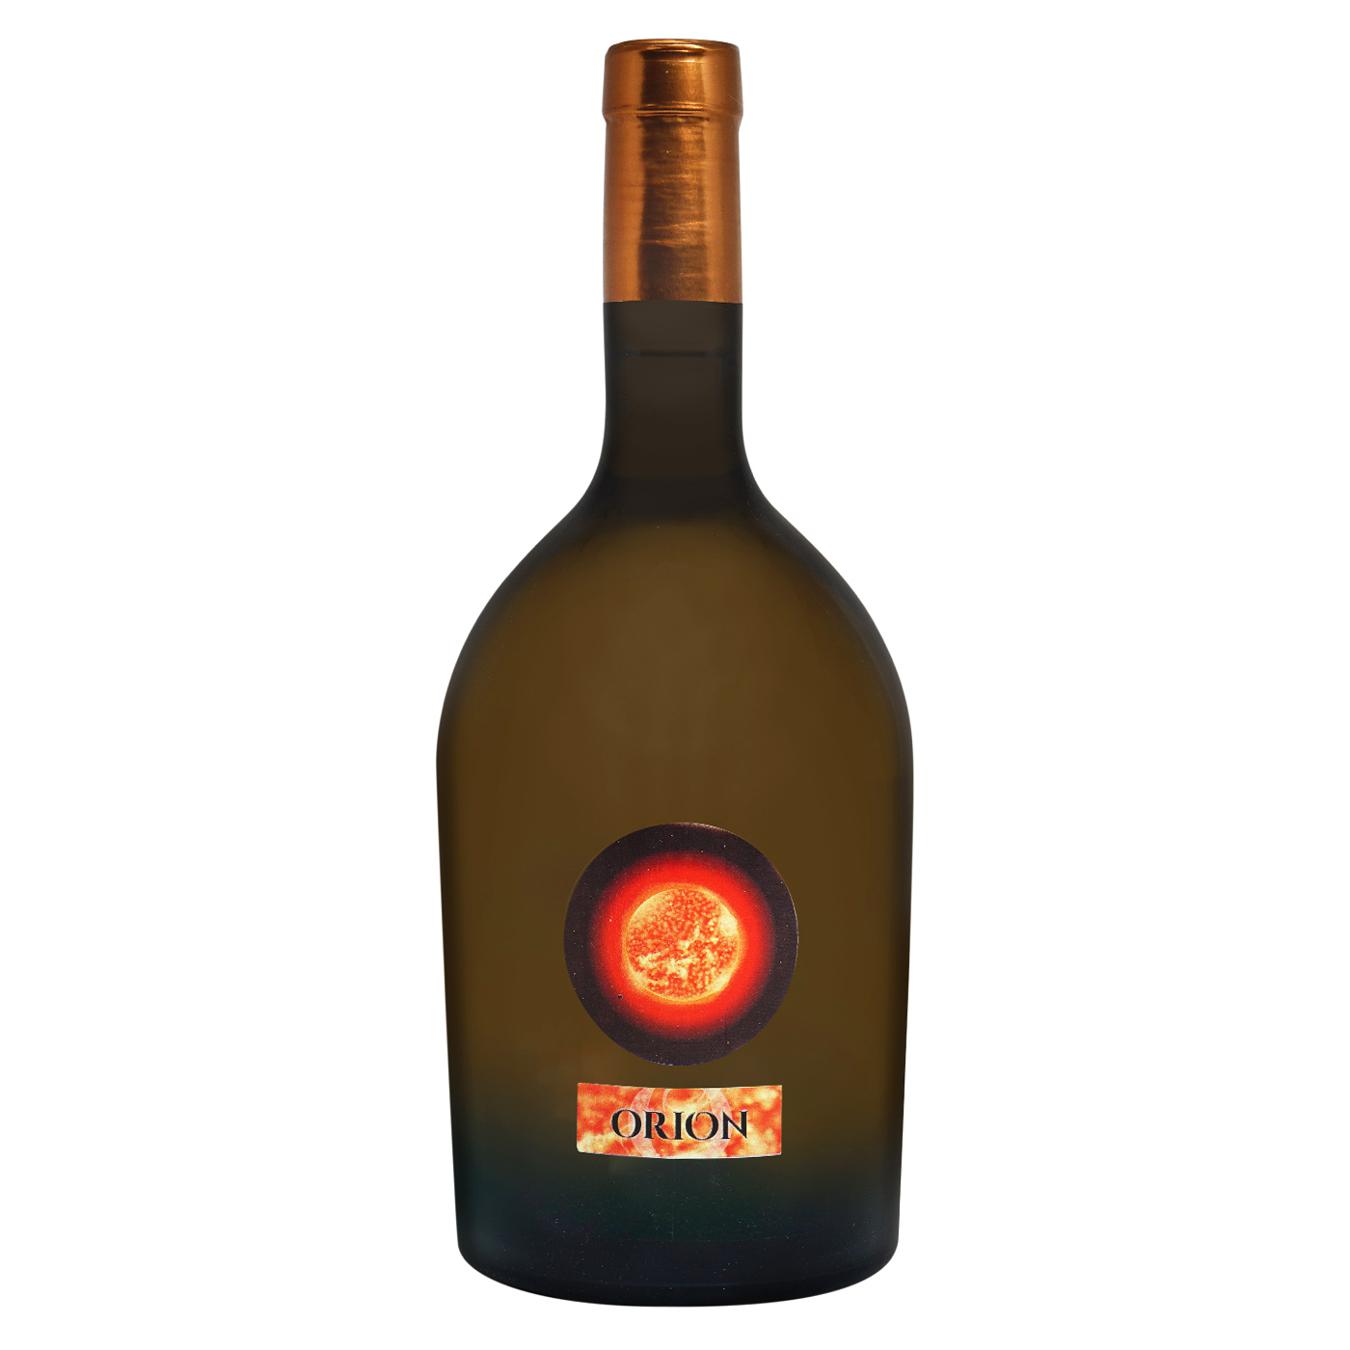 Orion Vin Orange dry white wine 12.5% 0.75 l